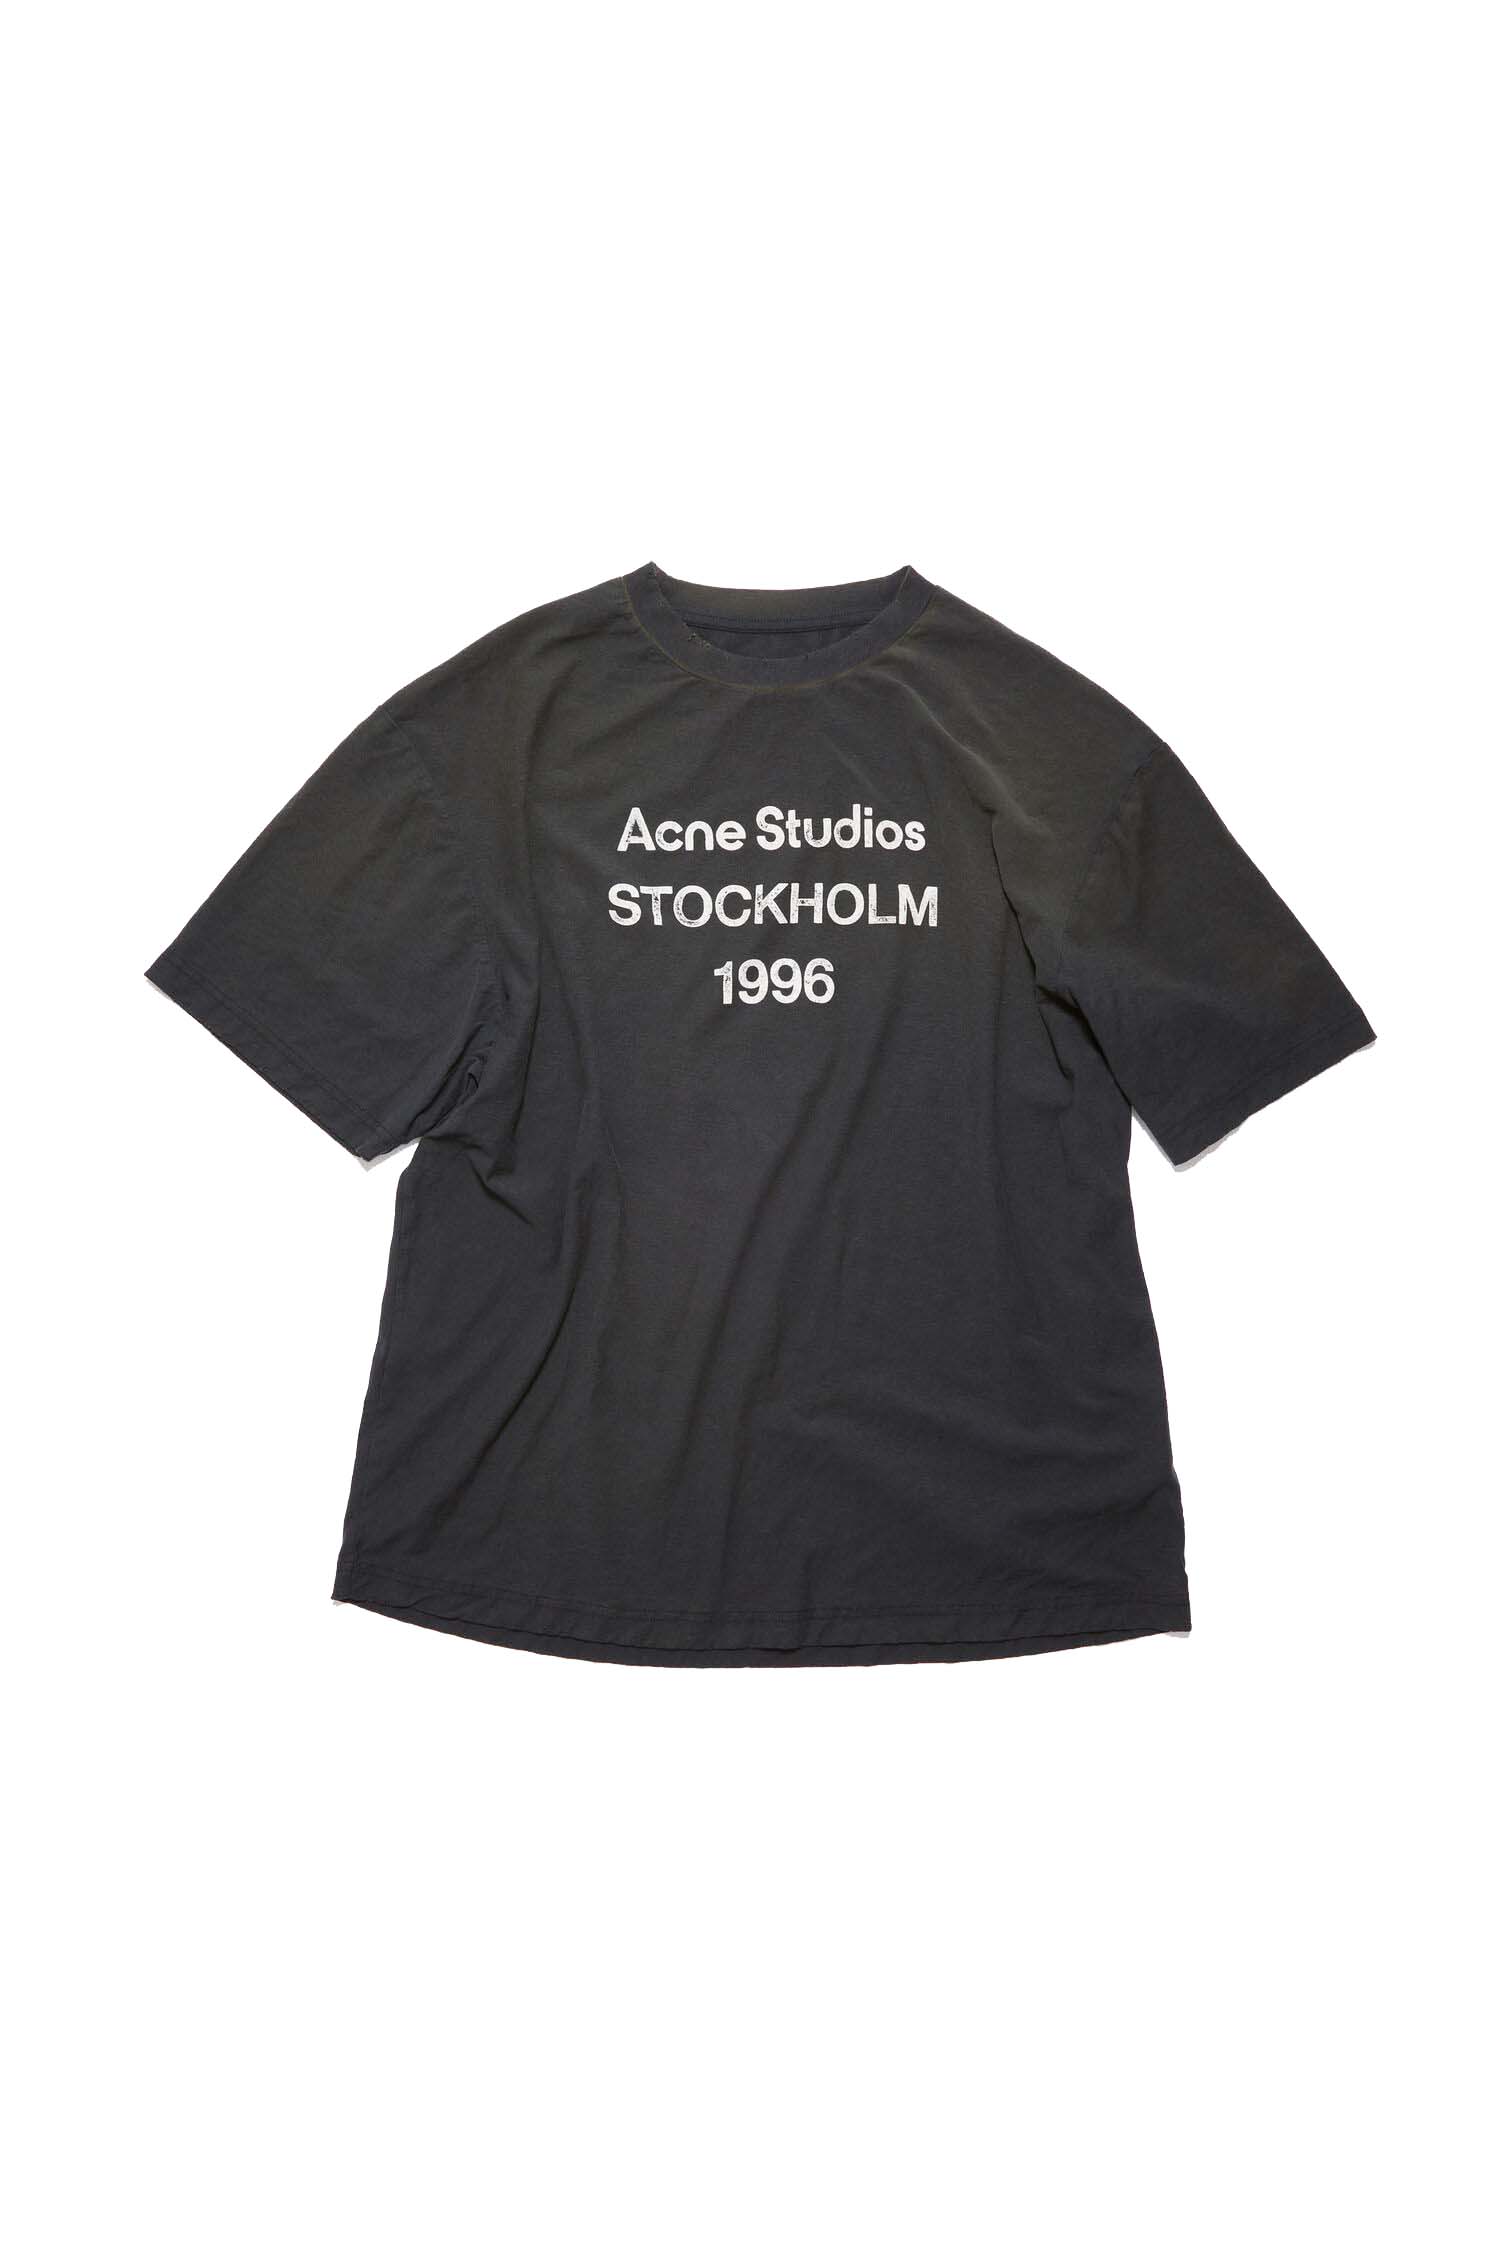 Acne Studios STOCKHOLM 1966 Logo T-Shirt Black - US